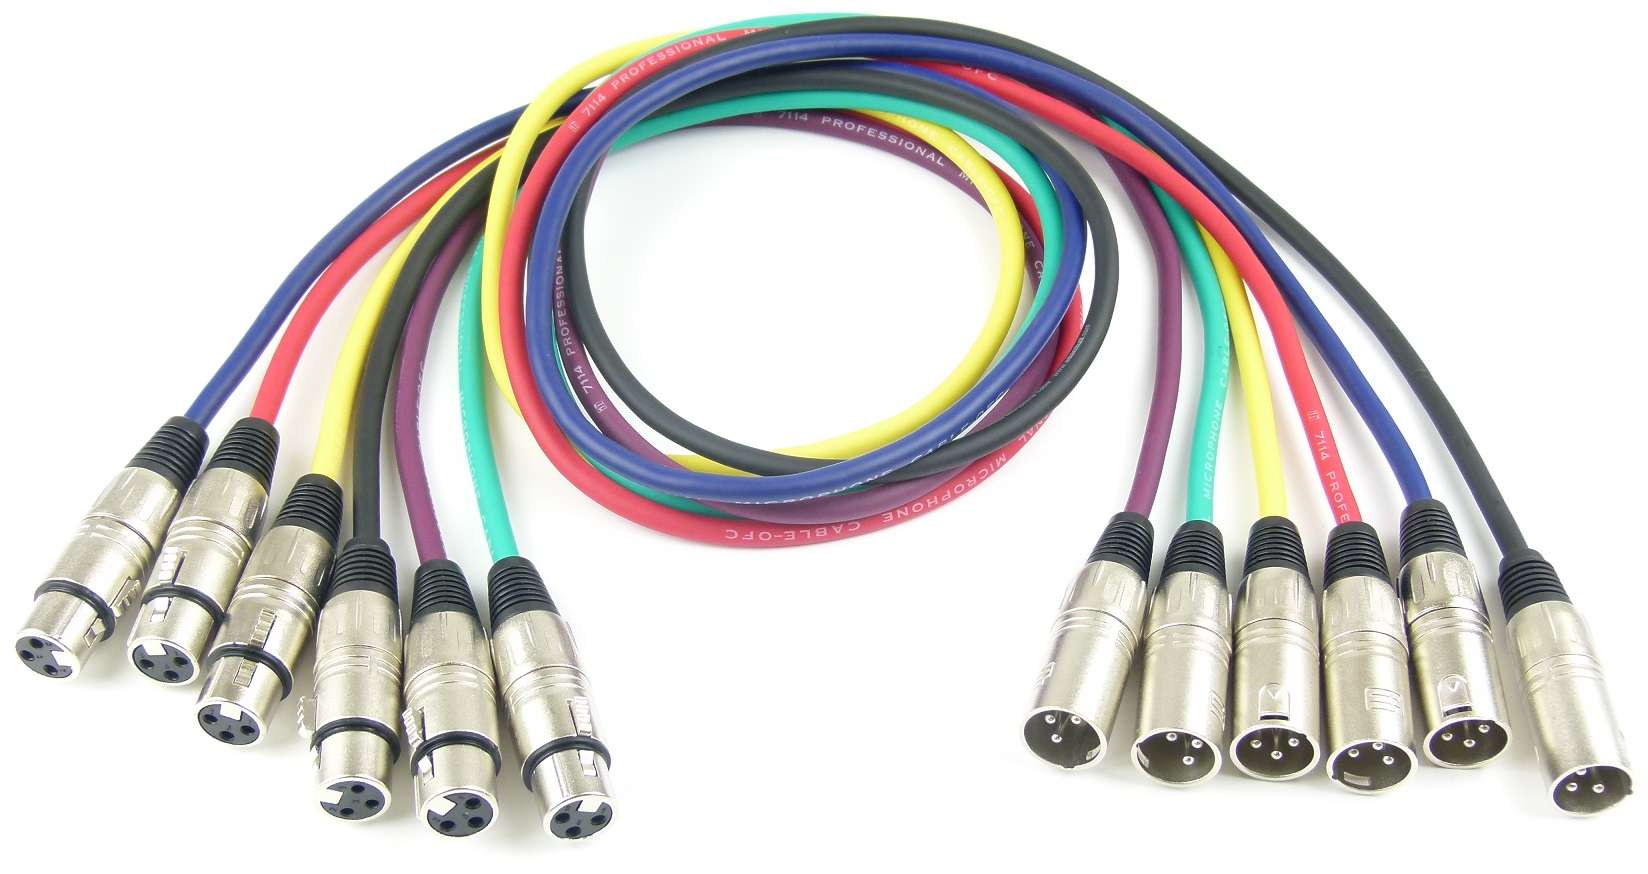 1 Set 1 M Adam Hall 3 Star Microphone Cable XLR XLR in 6 Colours DMX